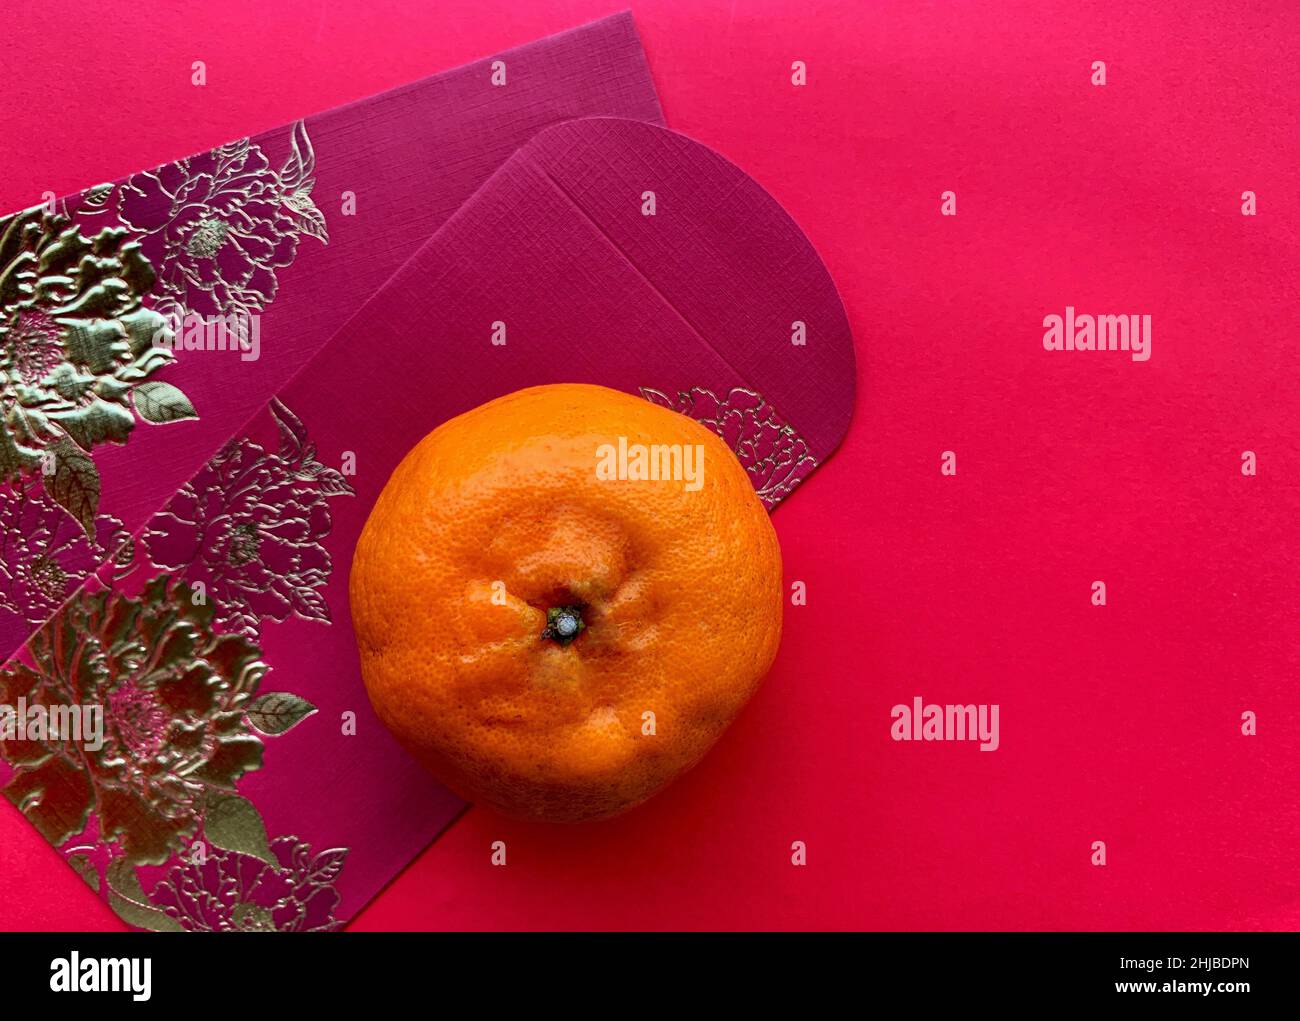 Happy Chinese New Year Celebration concept. With yellow envelope and mandarin orange Stock Photo